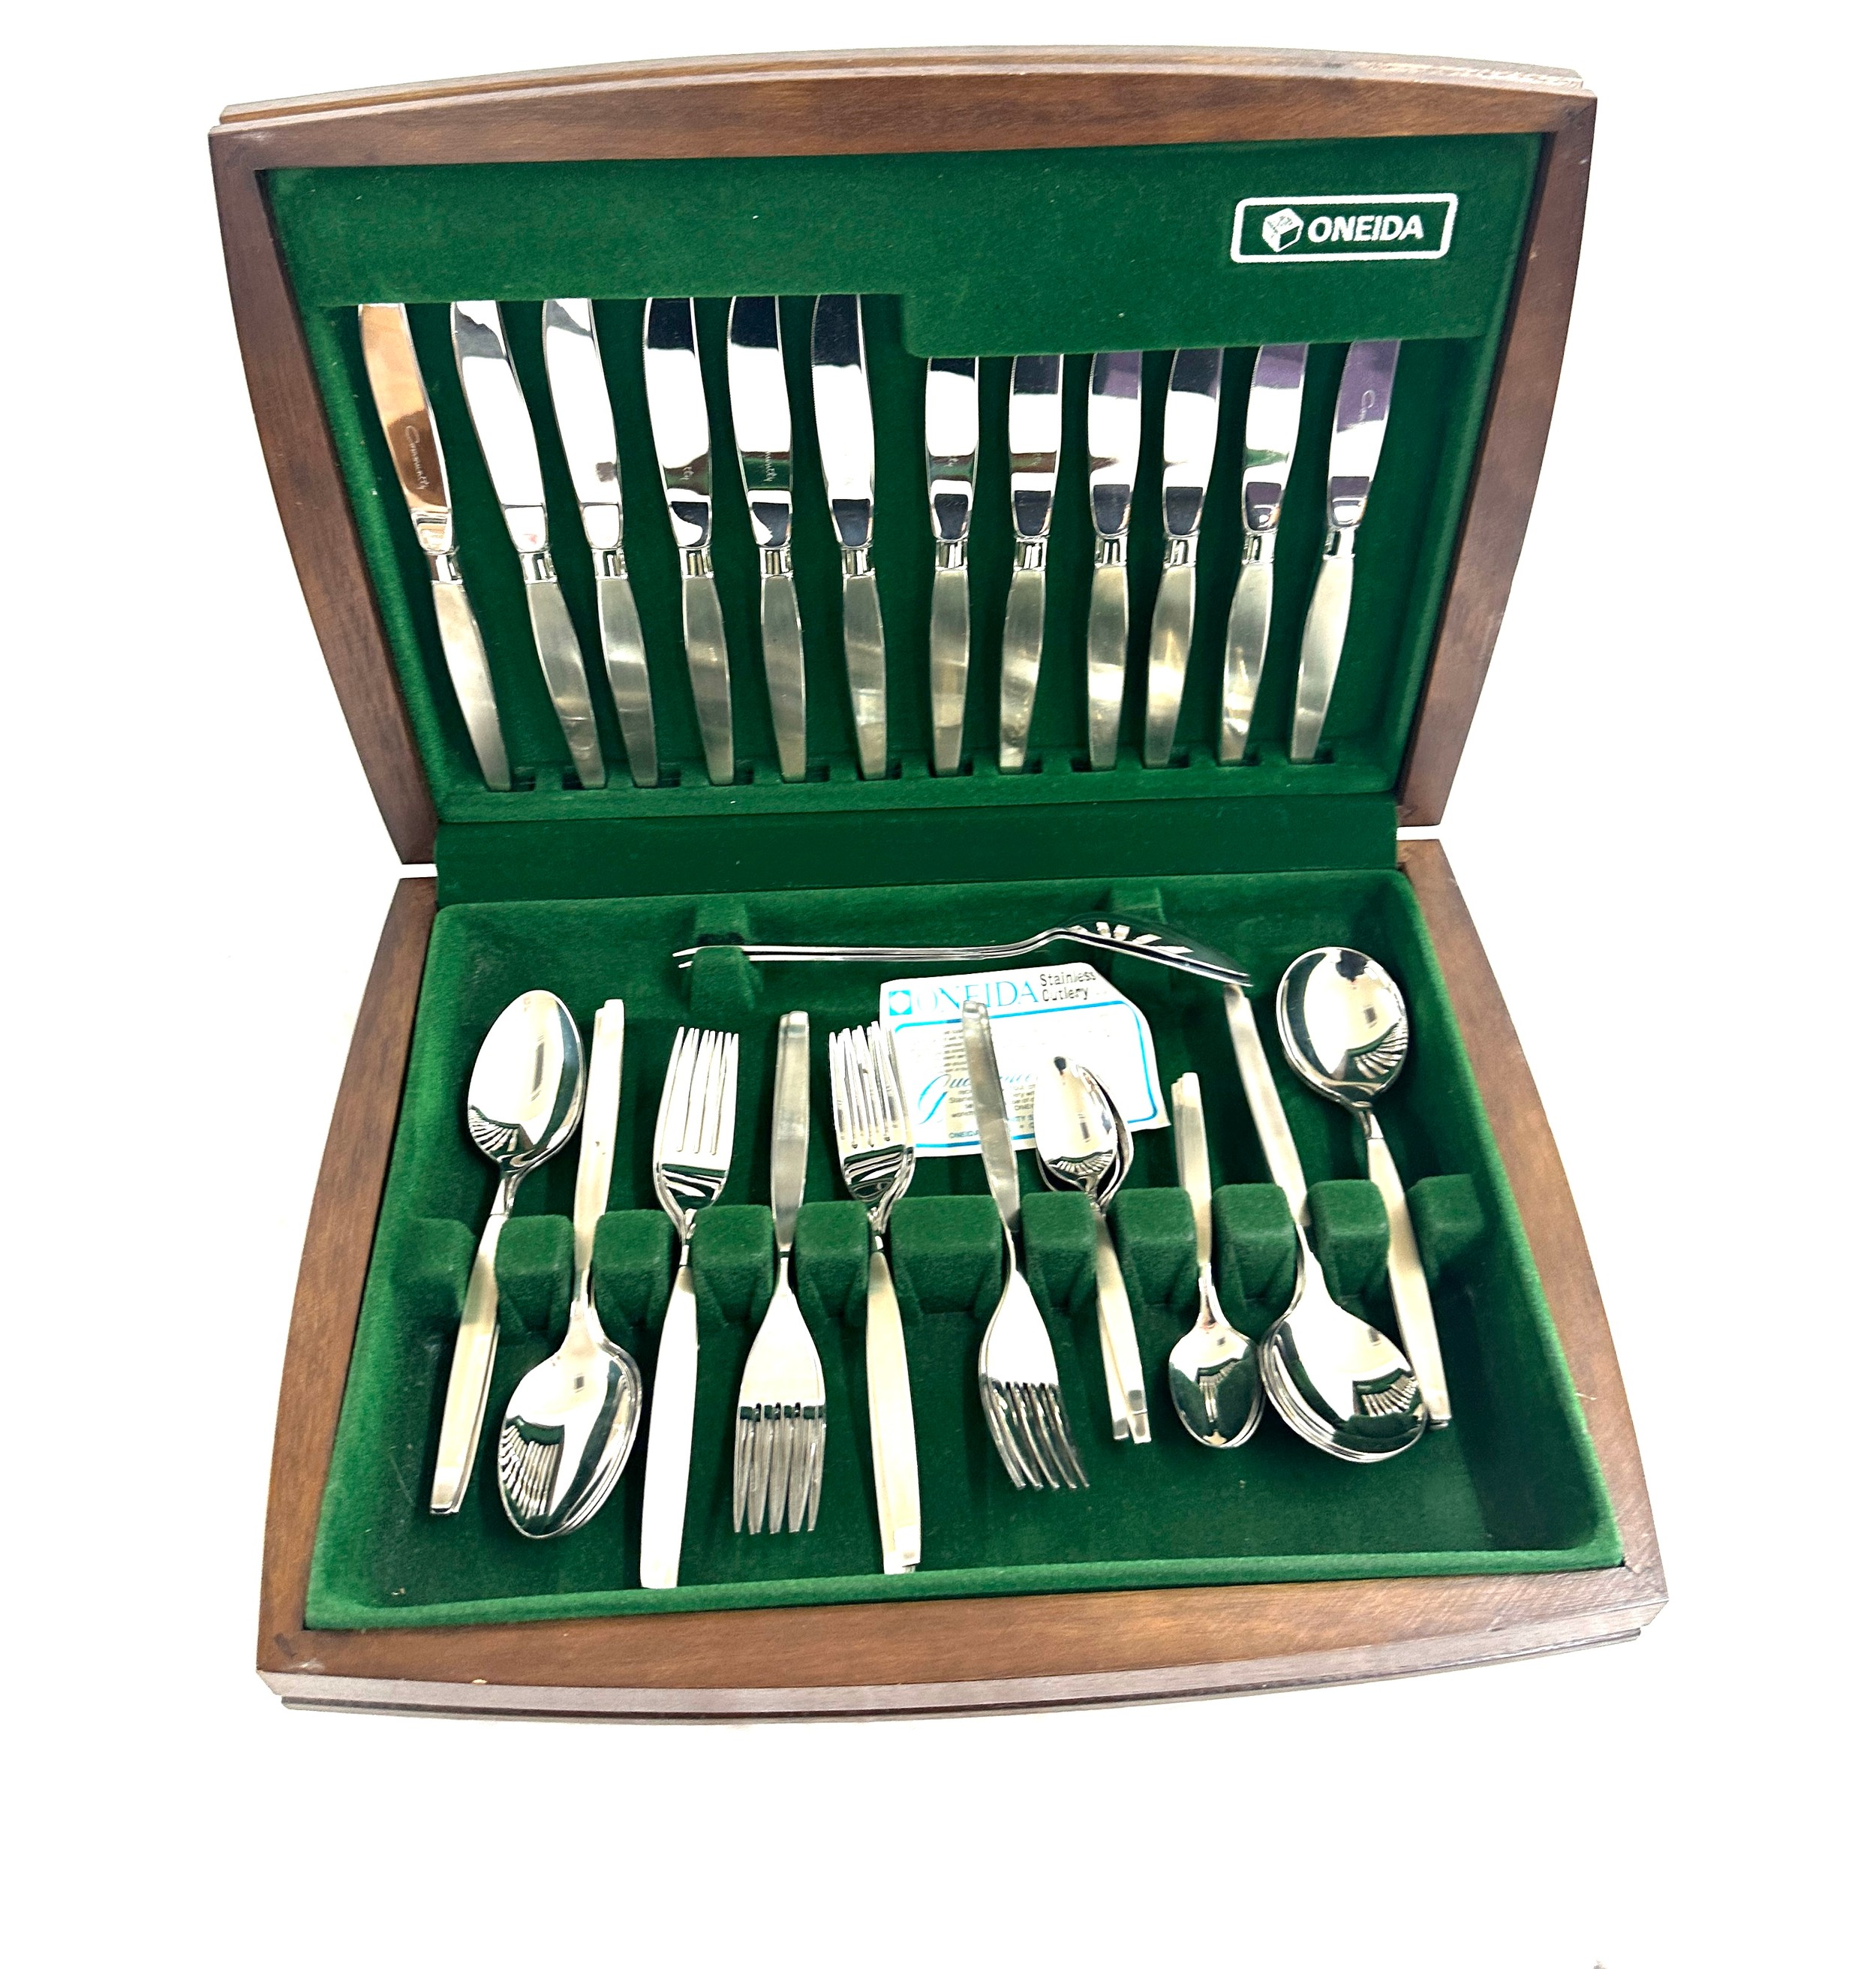 Vintage Oneida stainless steel cutlery set